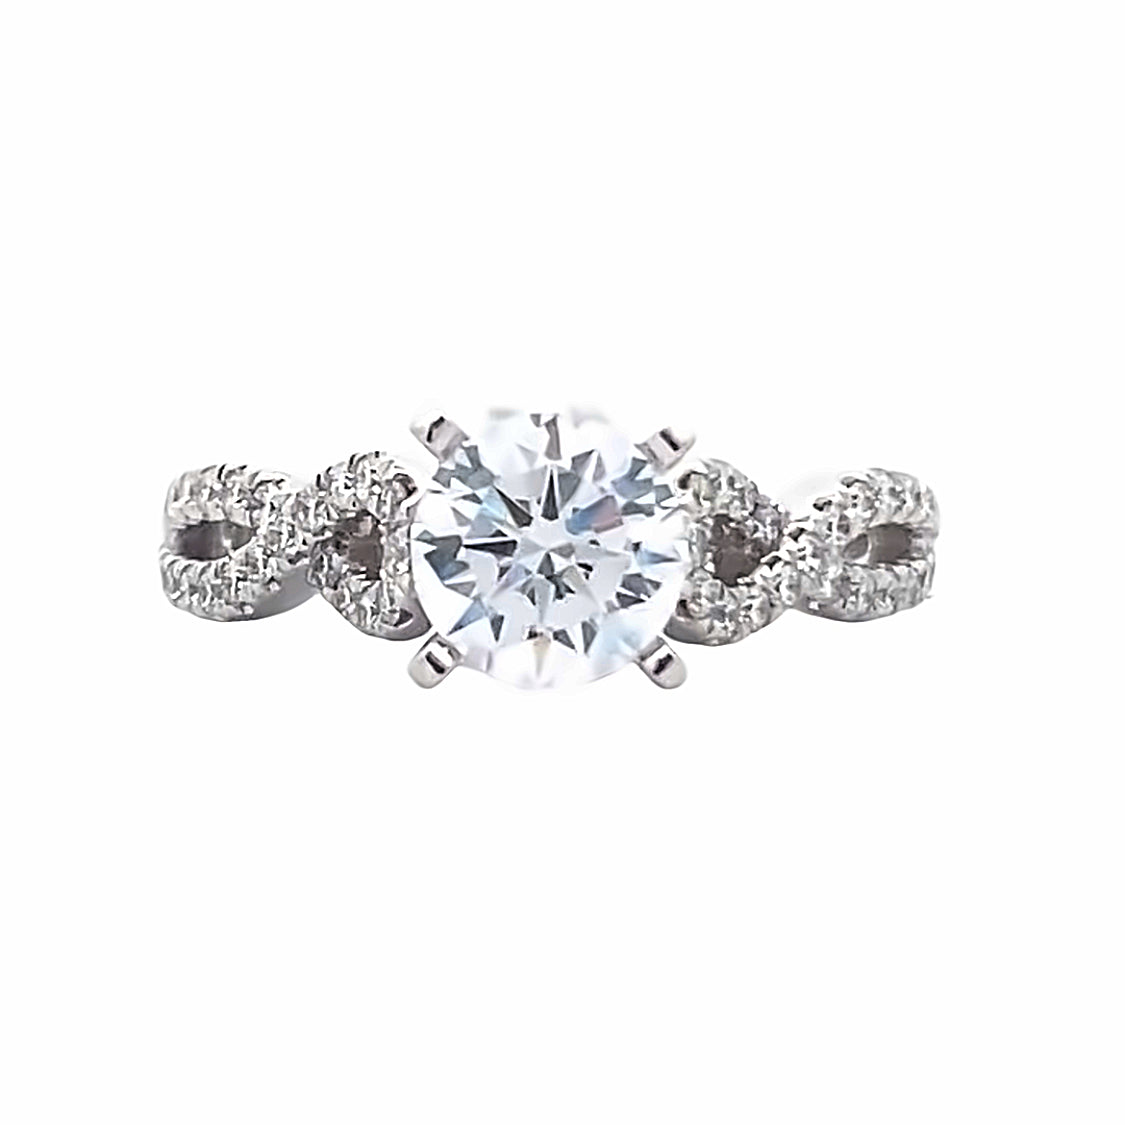 Gabriel & Co. 14 Karat Round Diamond Engagement Ring ER7805W44JJ